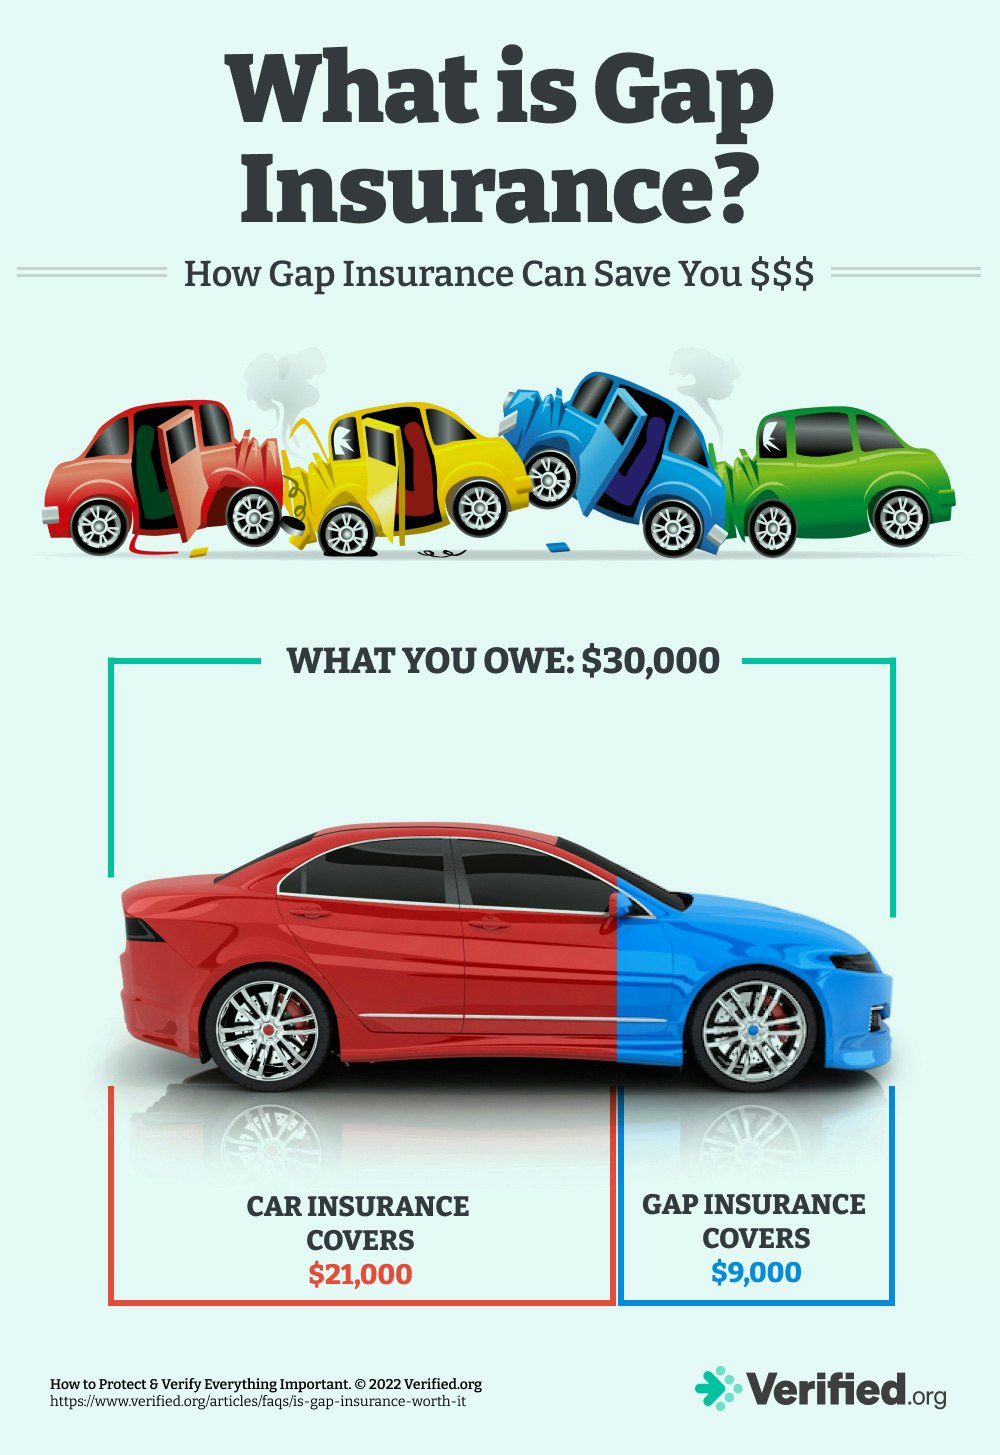 Is gap insurance worth it?